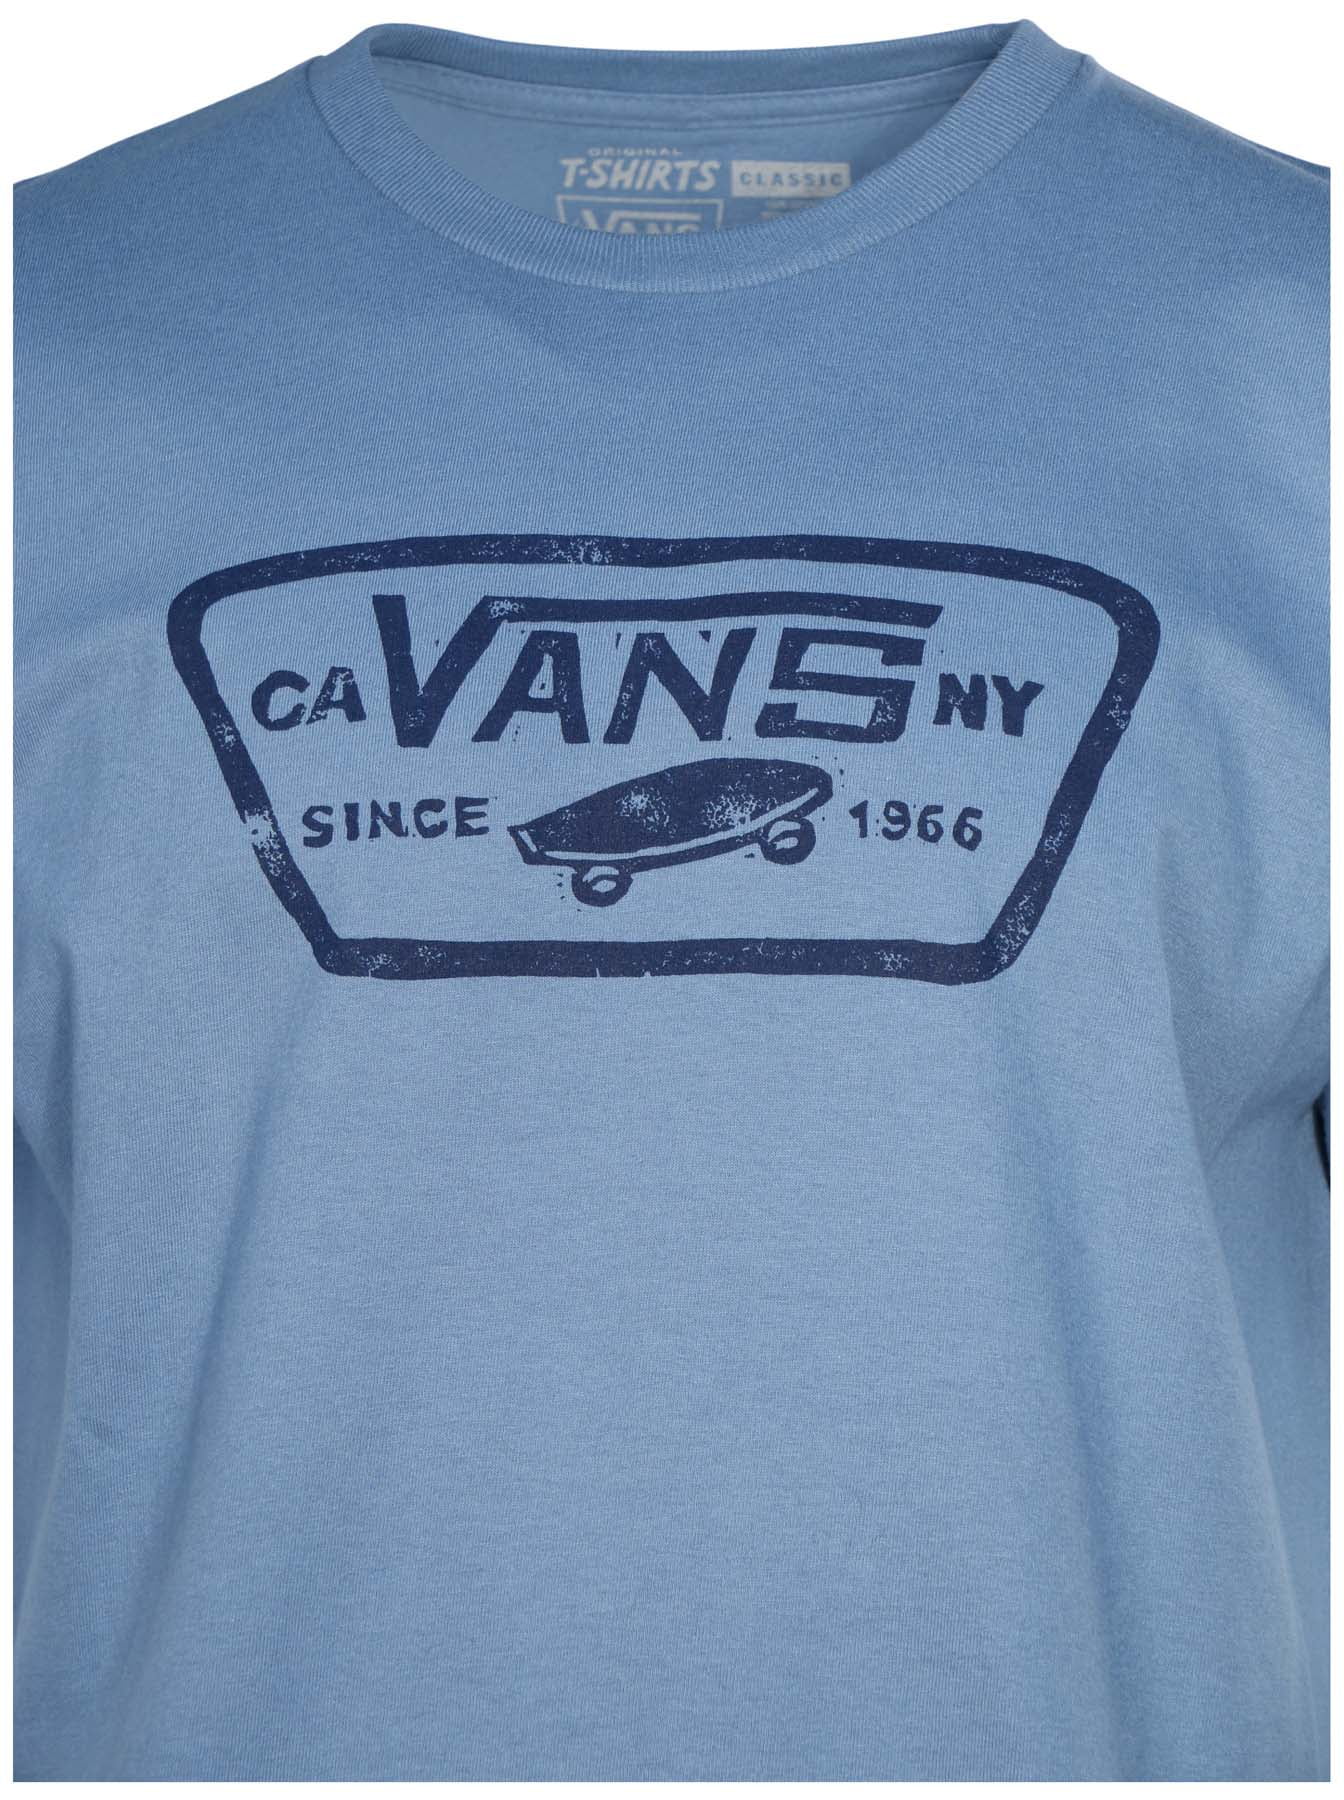 vans california since 1966